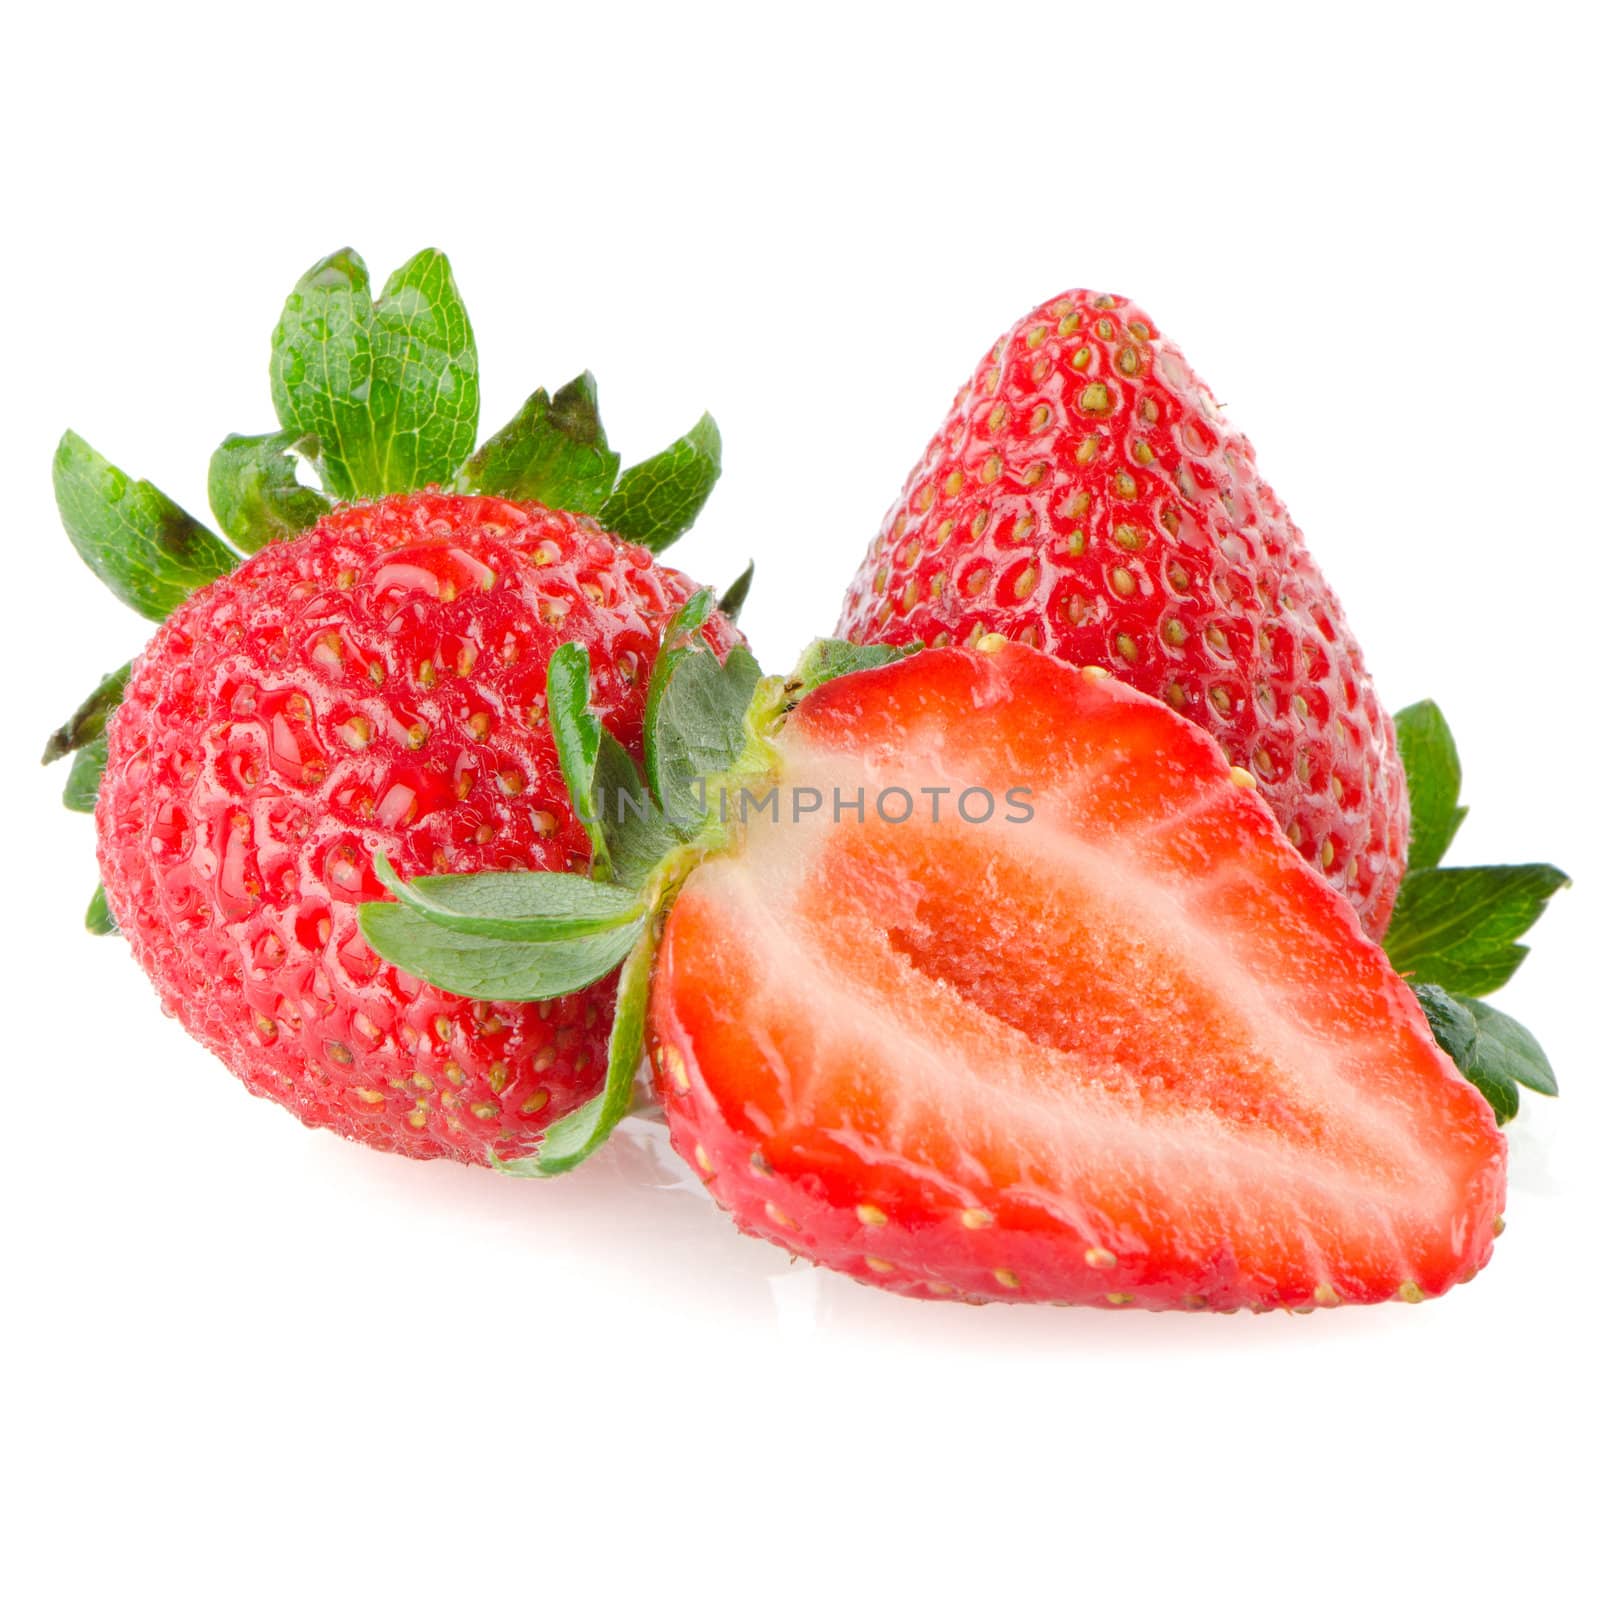 Beautiful strawberries isolated on white background.